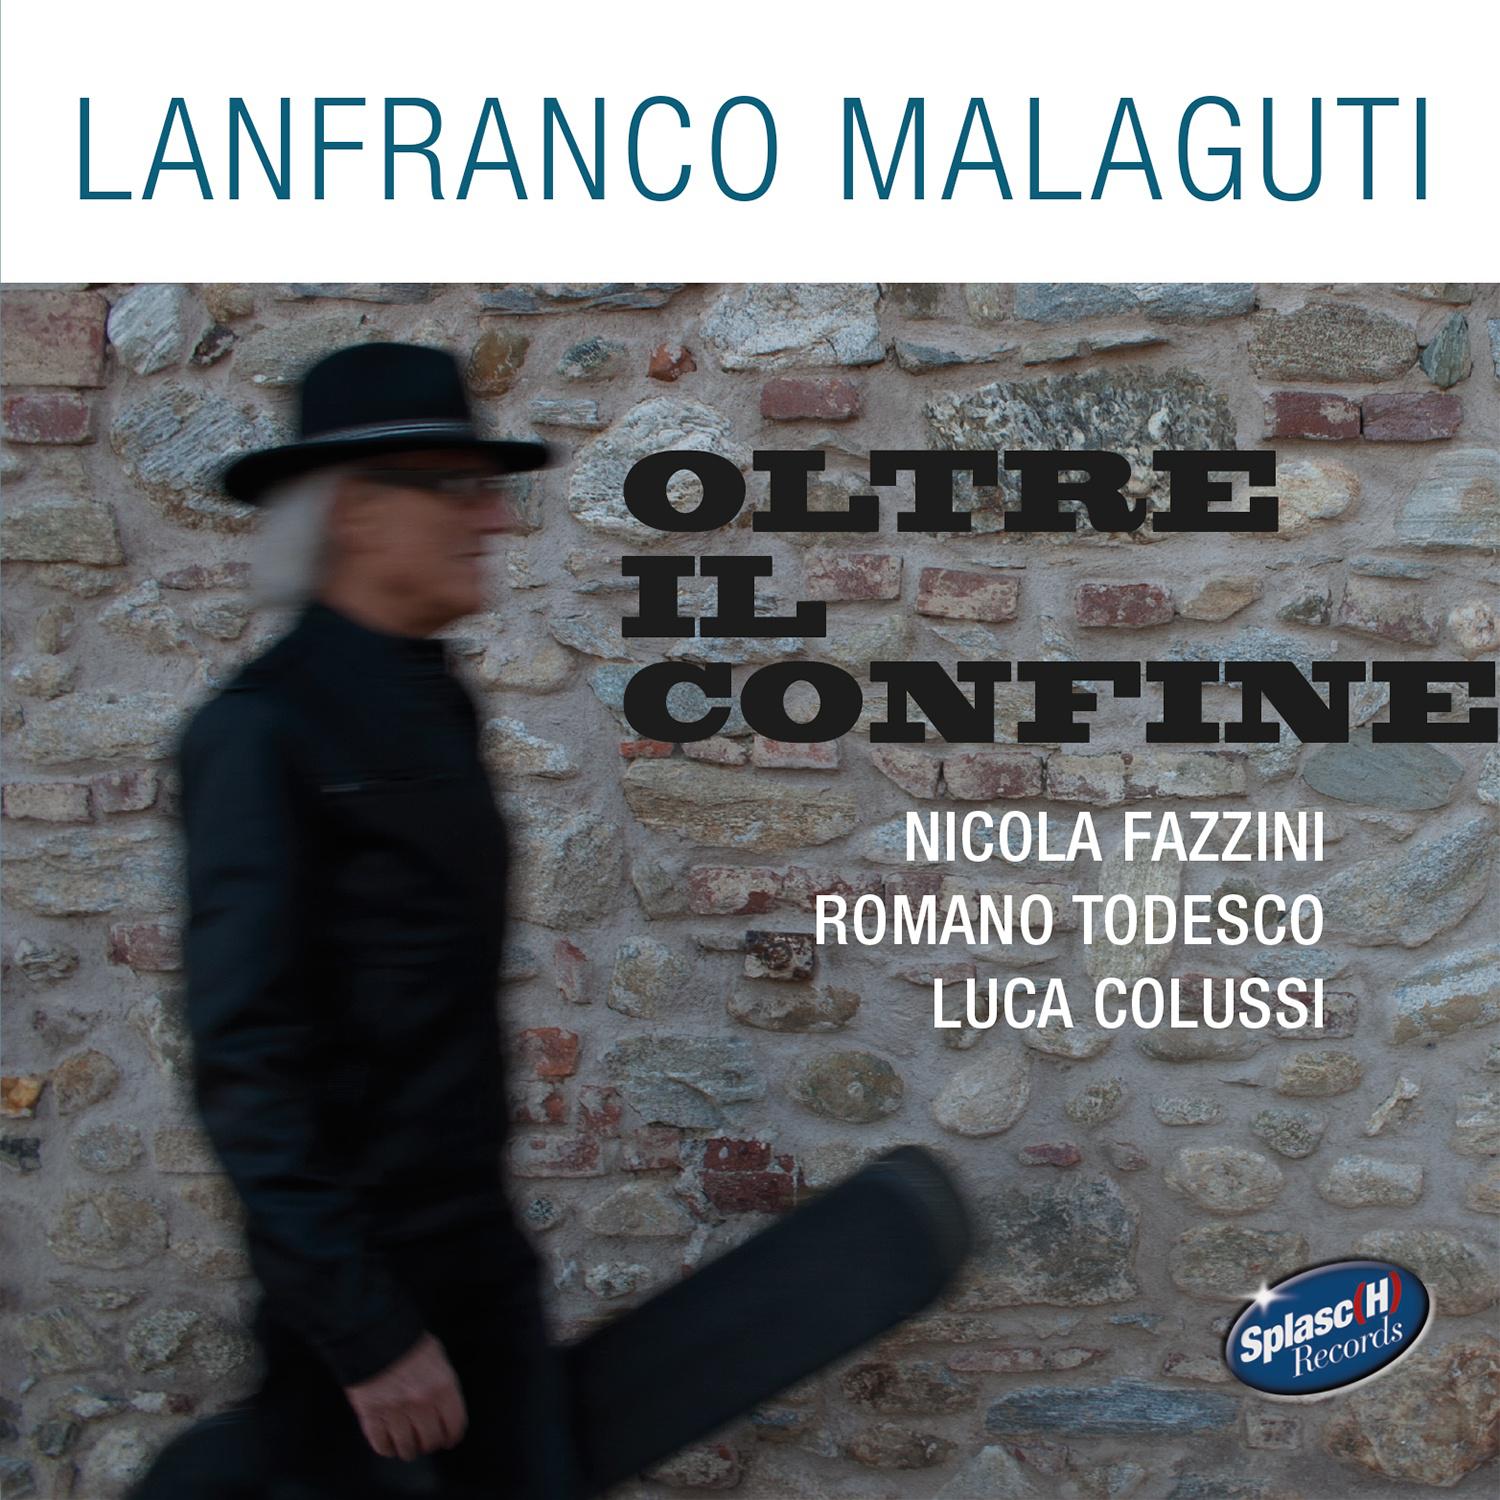 Lanfranco Malaguti - Passo 9